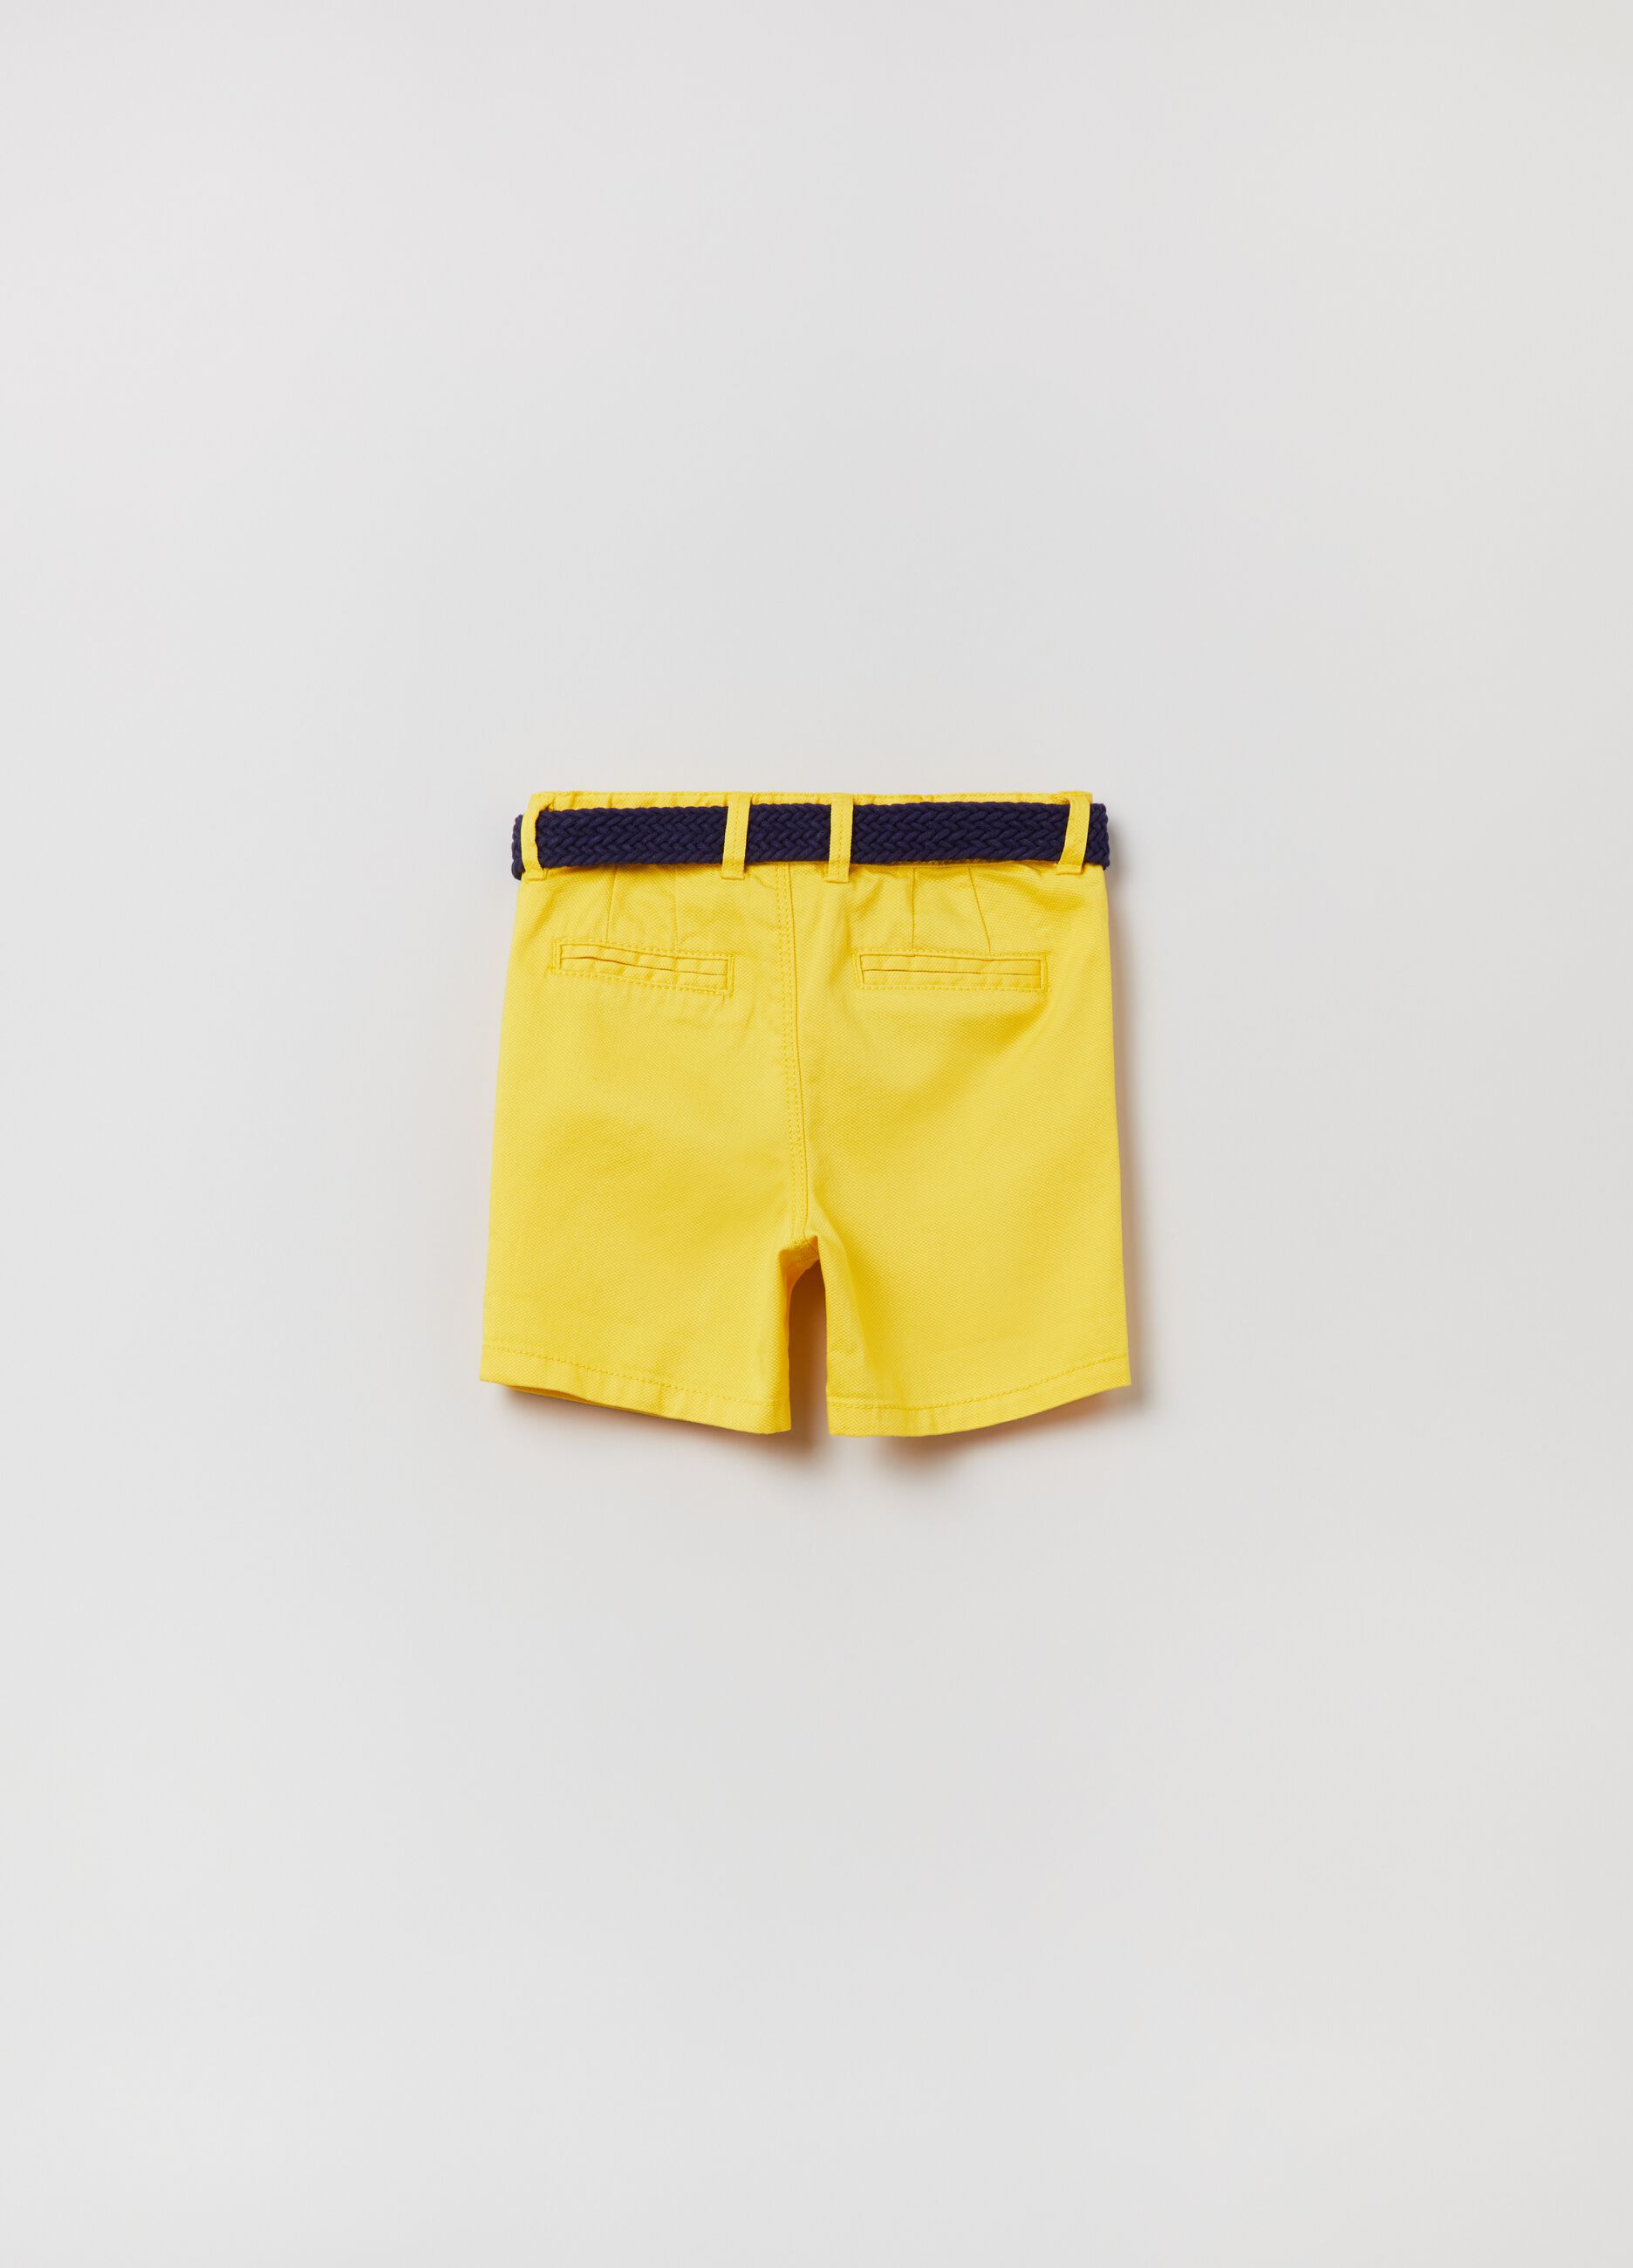 Shorts in cotton piquet with belt